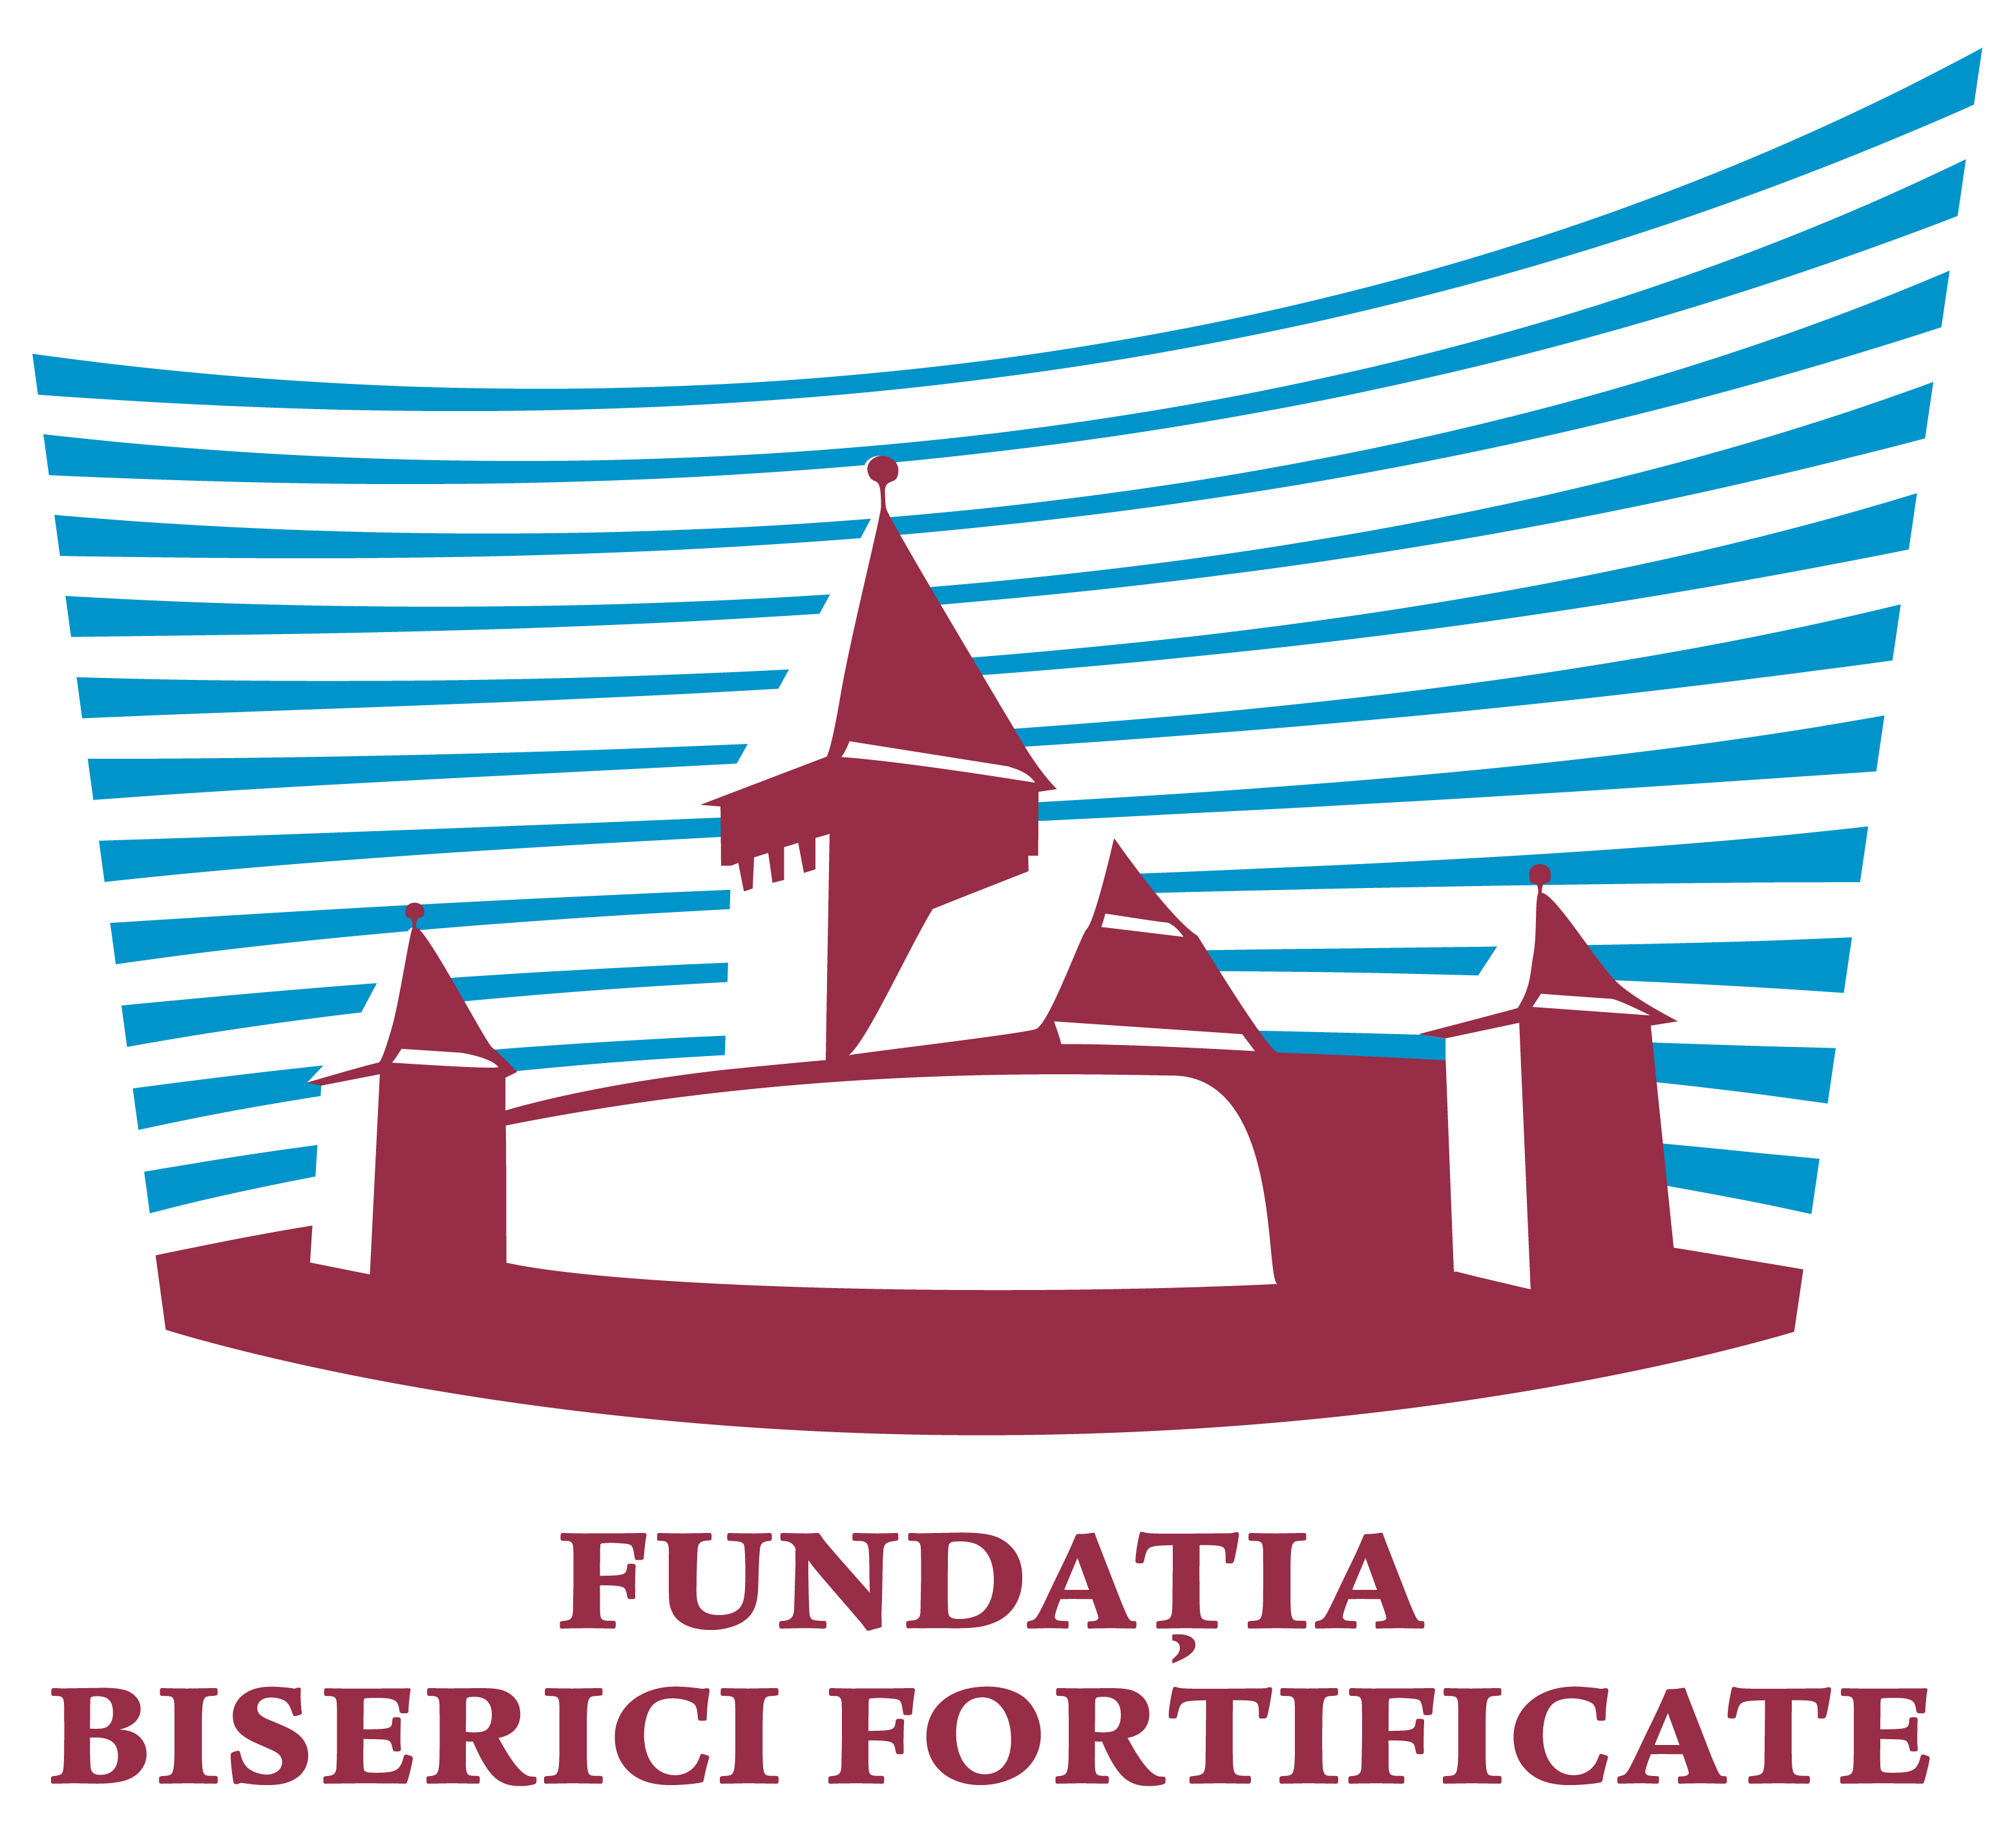 Fundatia Biserici Fortificate logo